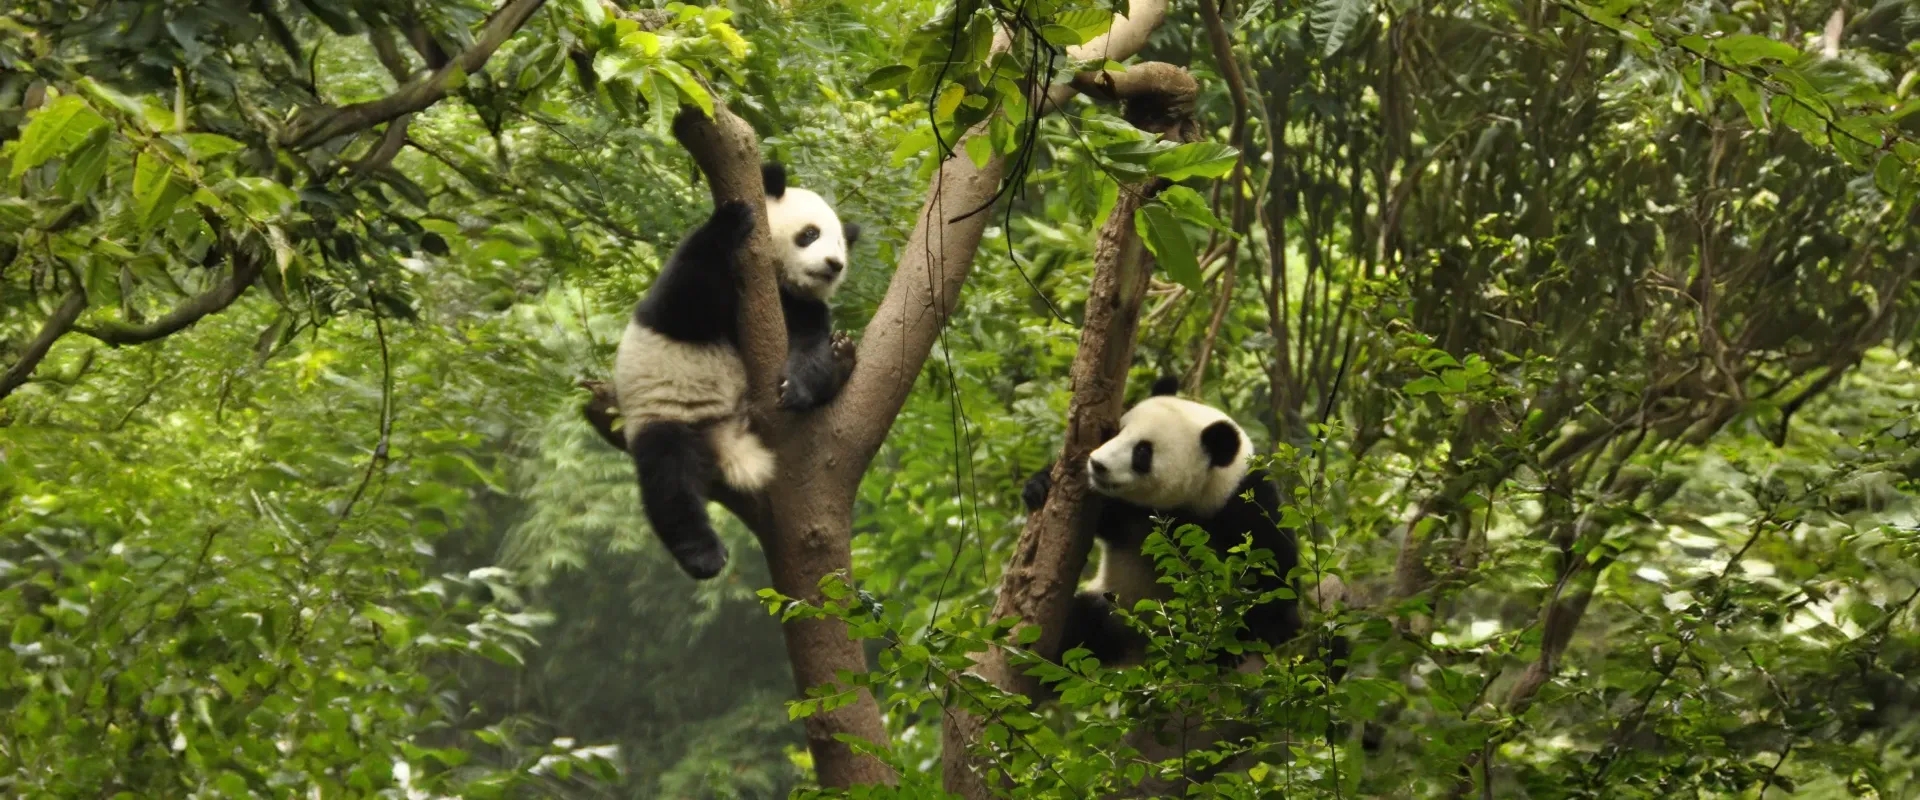 Two pandas climb a tree in China